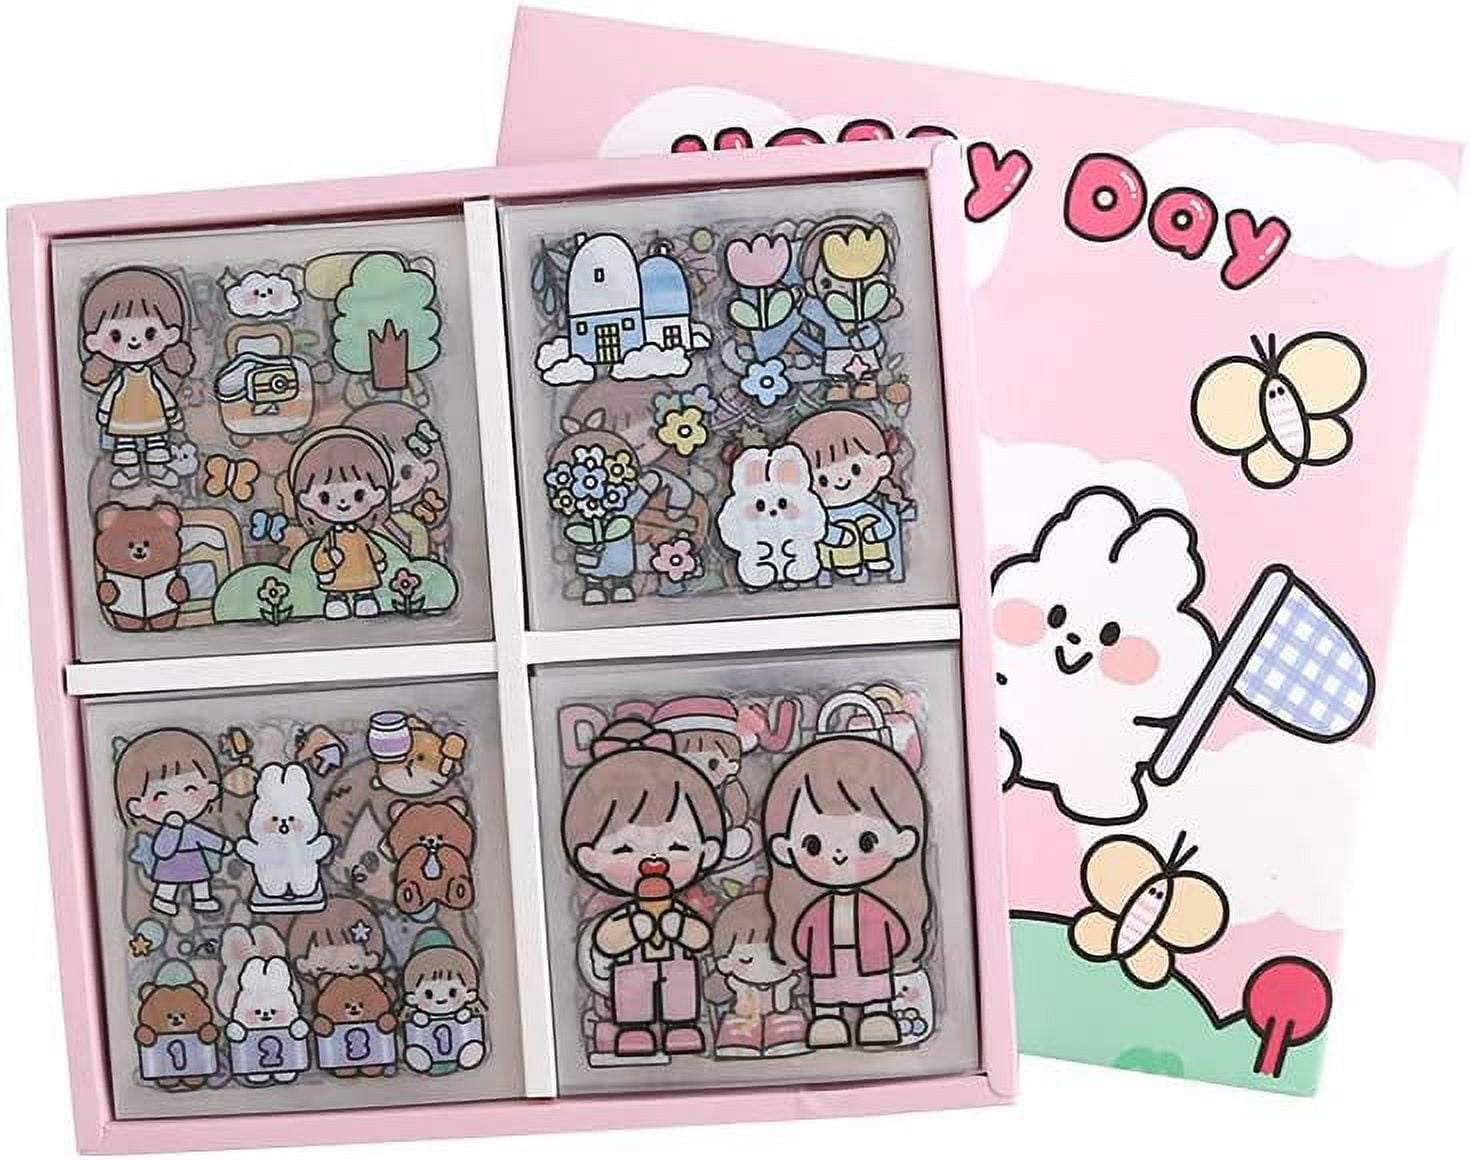 DanceeMangoos 6 Sheets Kawaii Washi Stickers, Cute Cartoon Printed Adhesive  Label Decorative Sticker for Scrapbooking Diary Journaling Planner DIY  Craft, Aesthetic School Stational Supplies Stuffs 